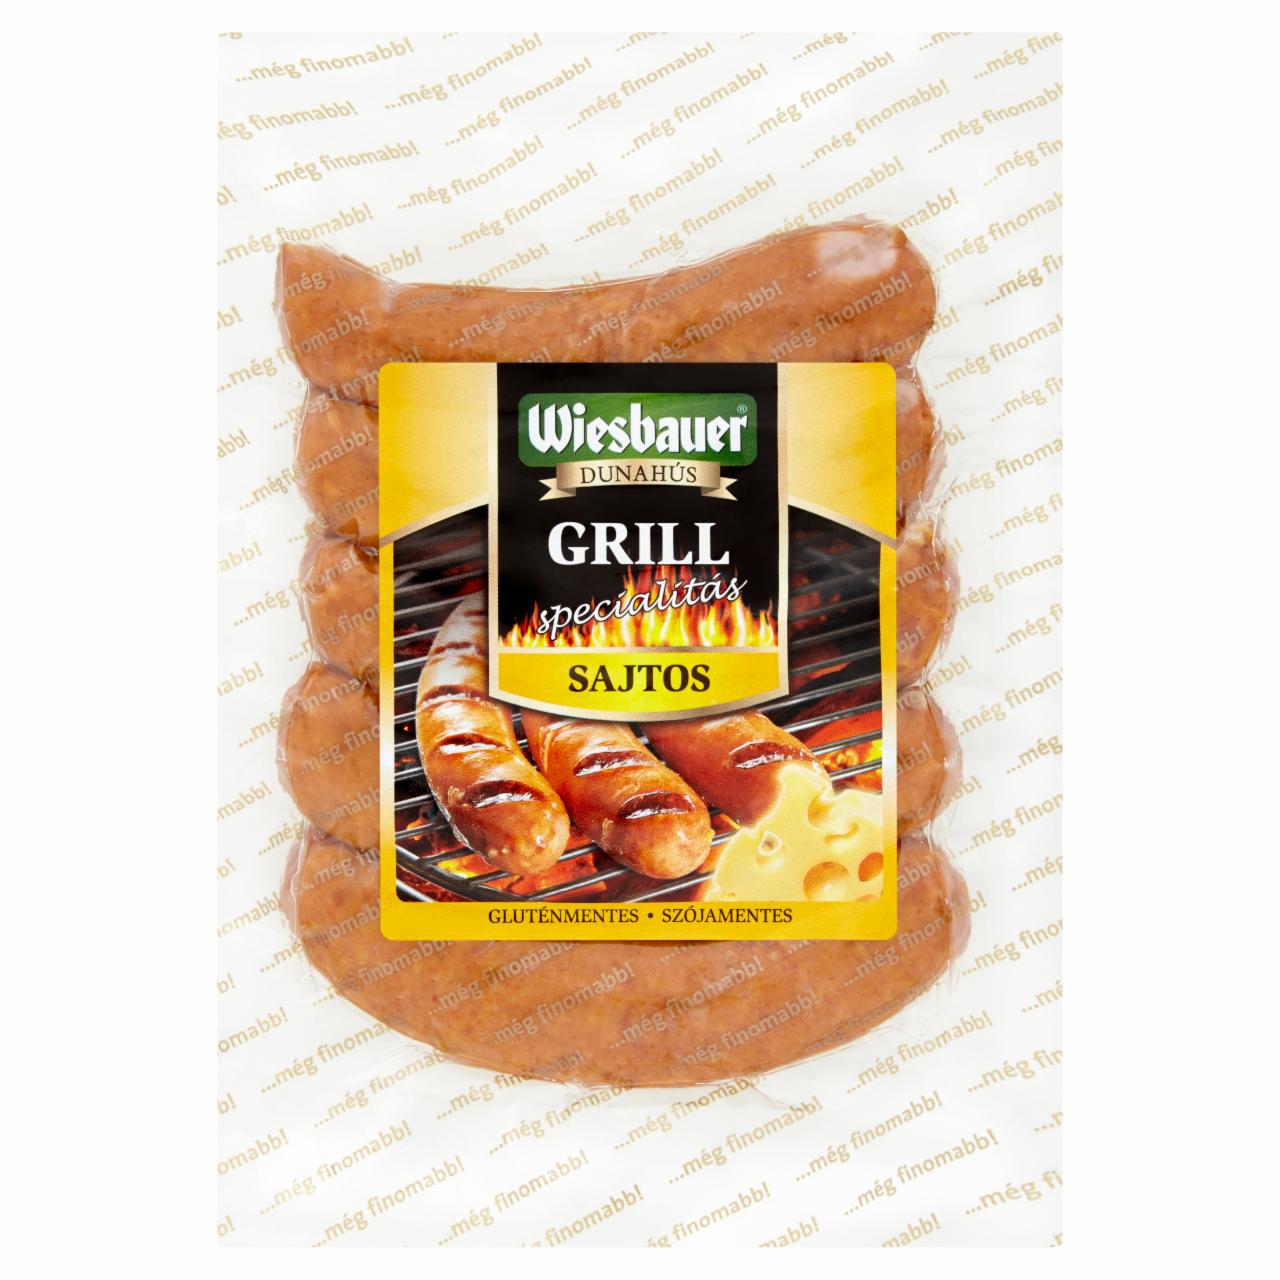 Képek - Wiesbauer sajtos grill 300 g